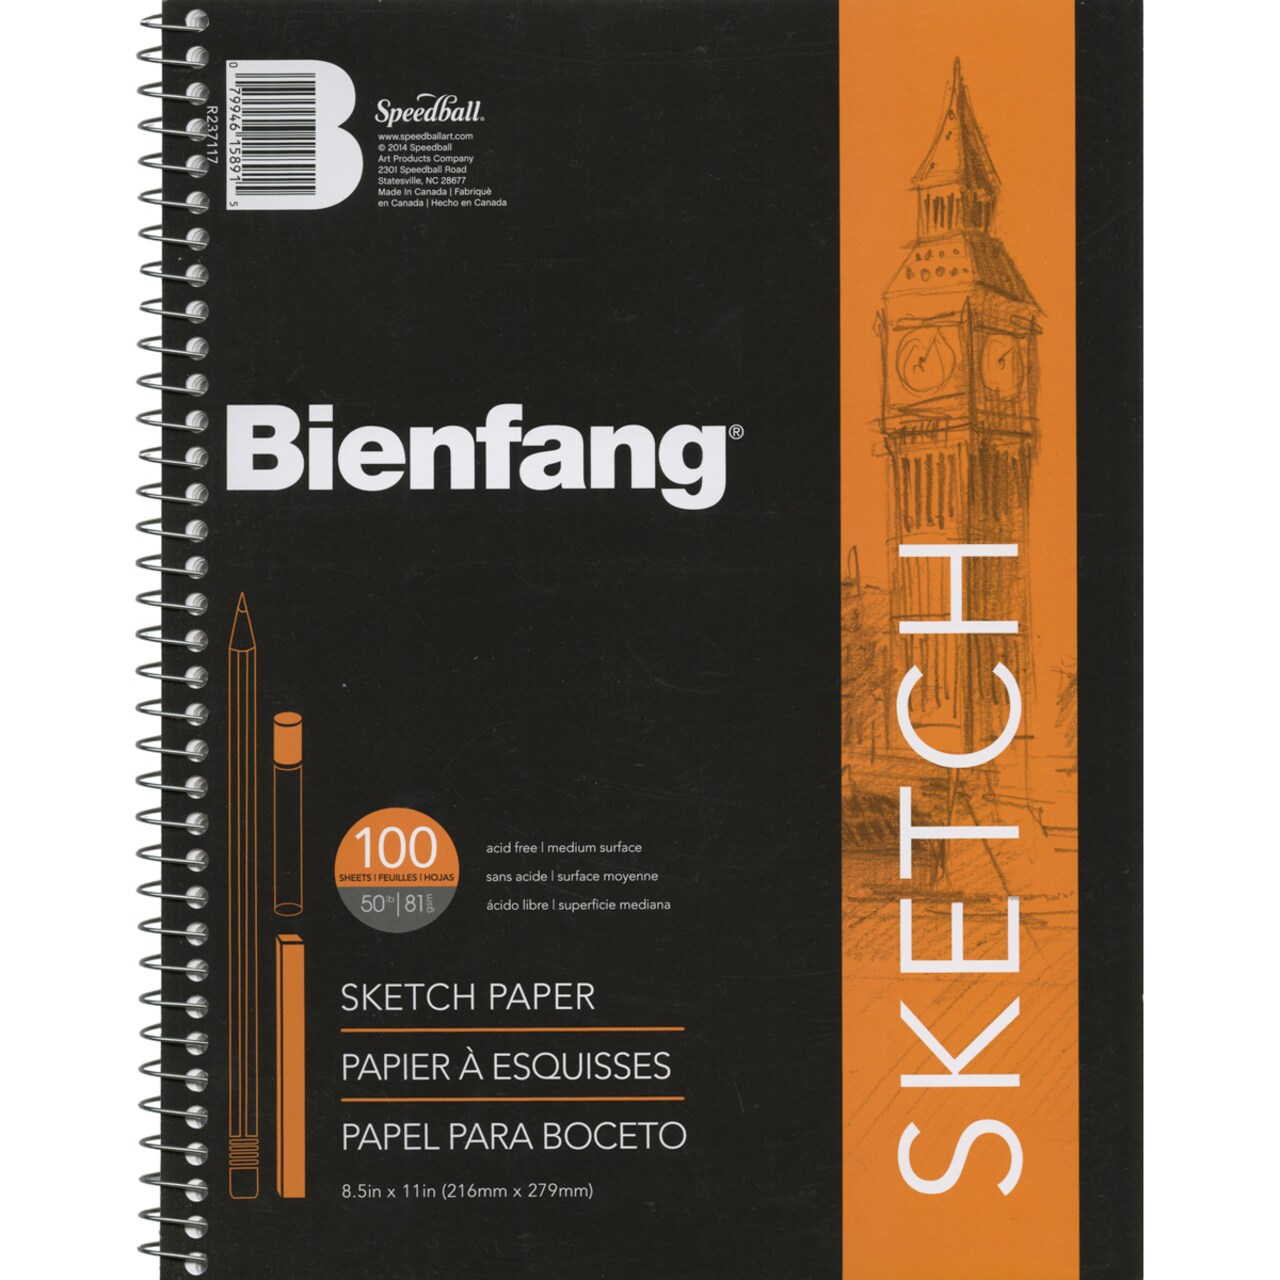 Bienfang Spiral Sketch Book 8.5X11-100 Sheets